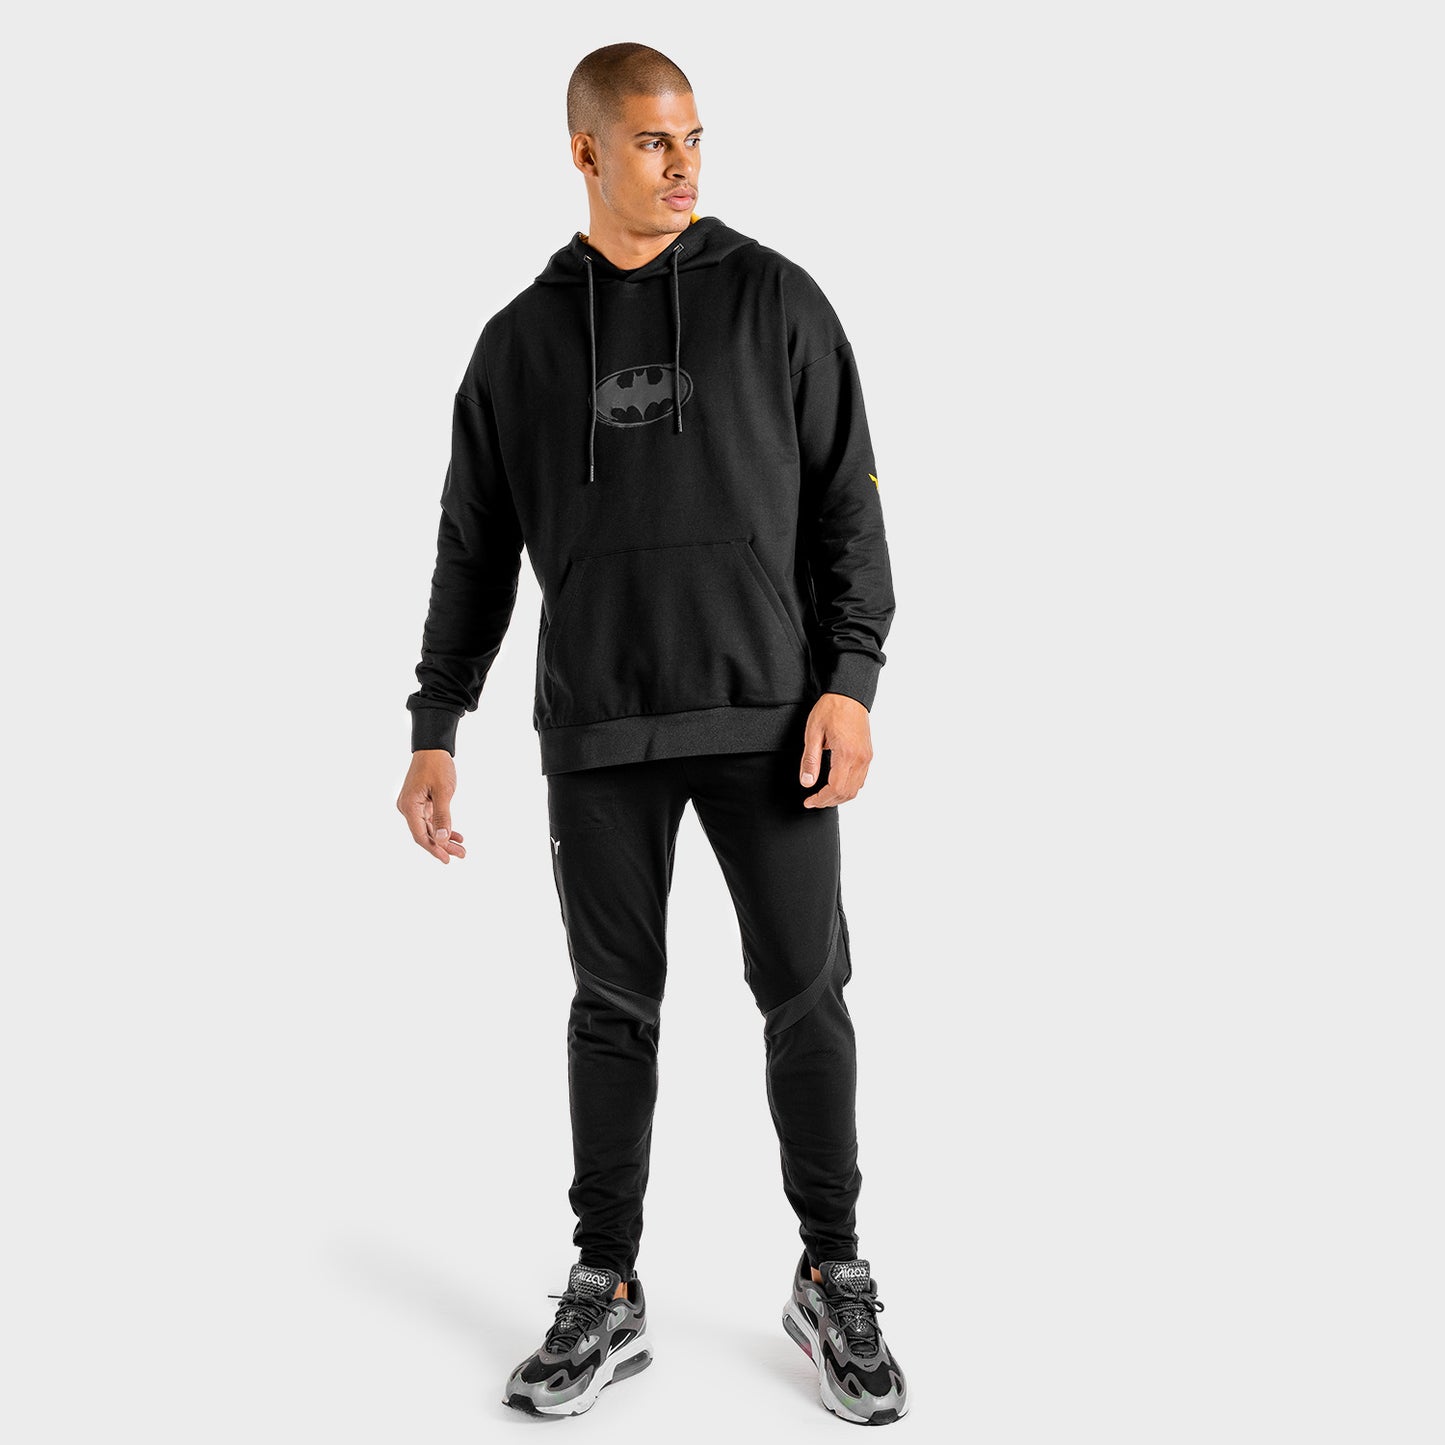 squatwolf-gym-wear-batman-gym-hoodie-black-workout-hoodies-for-men